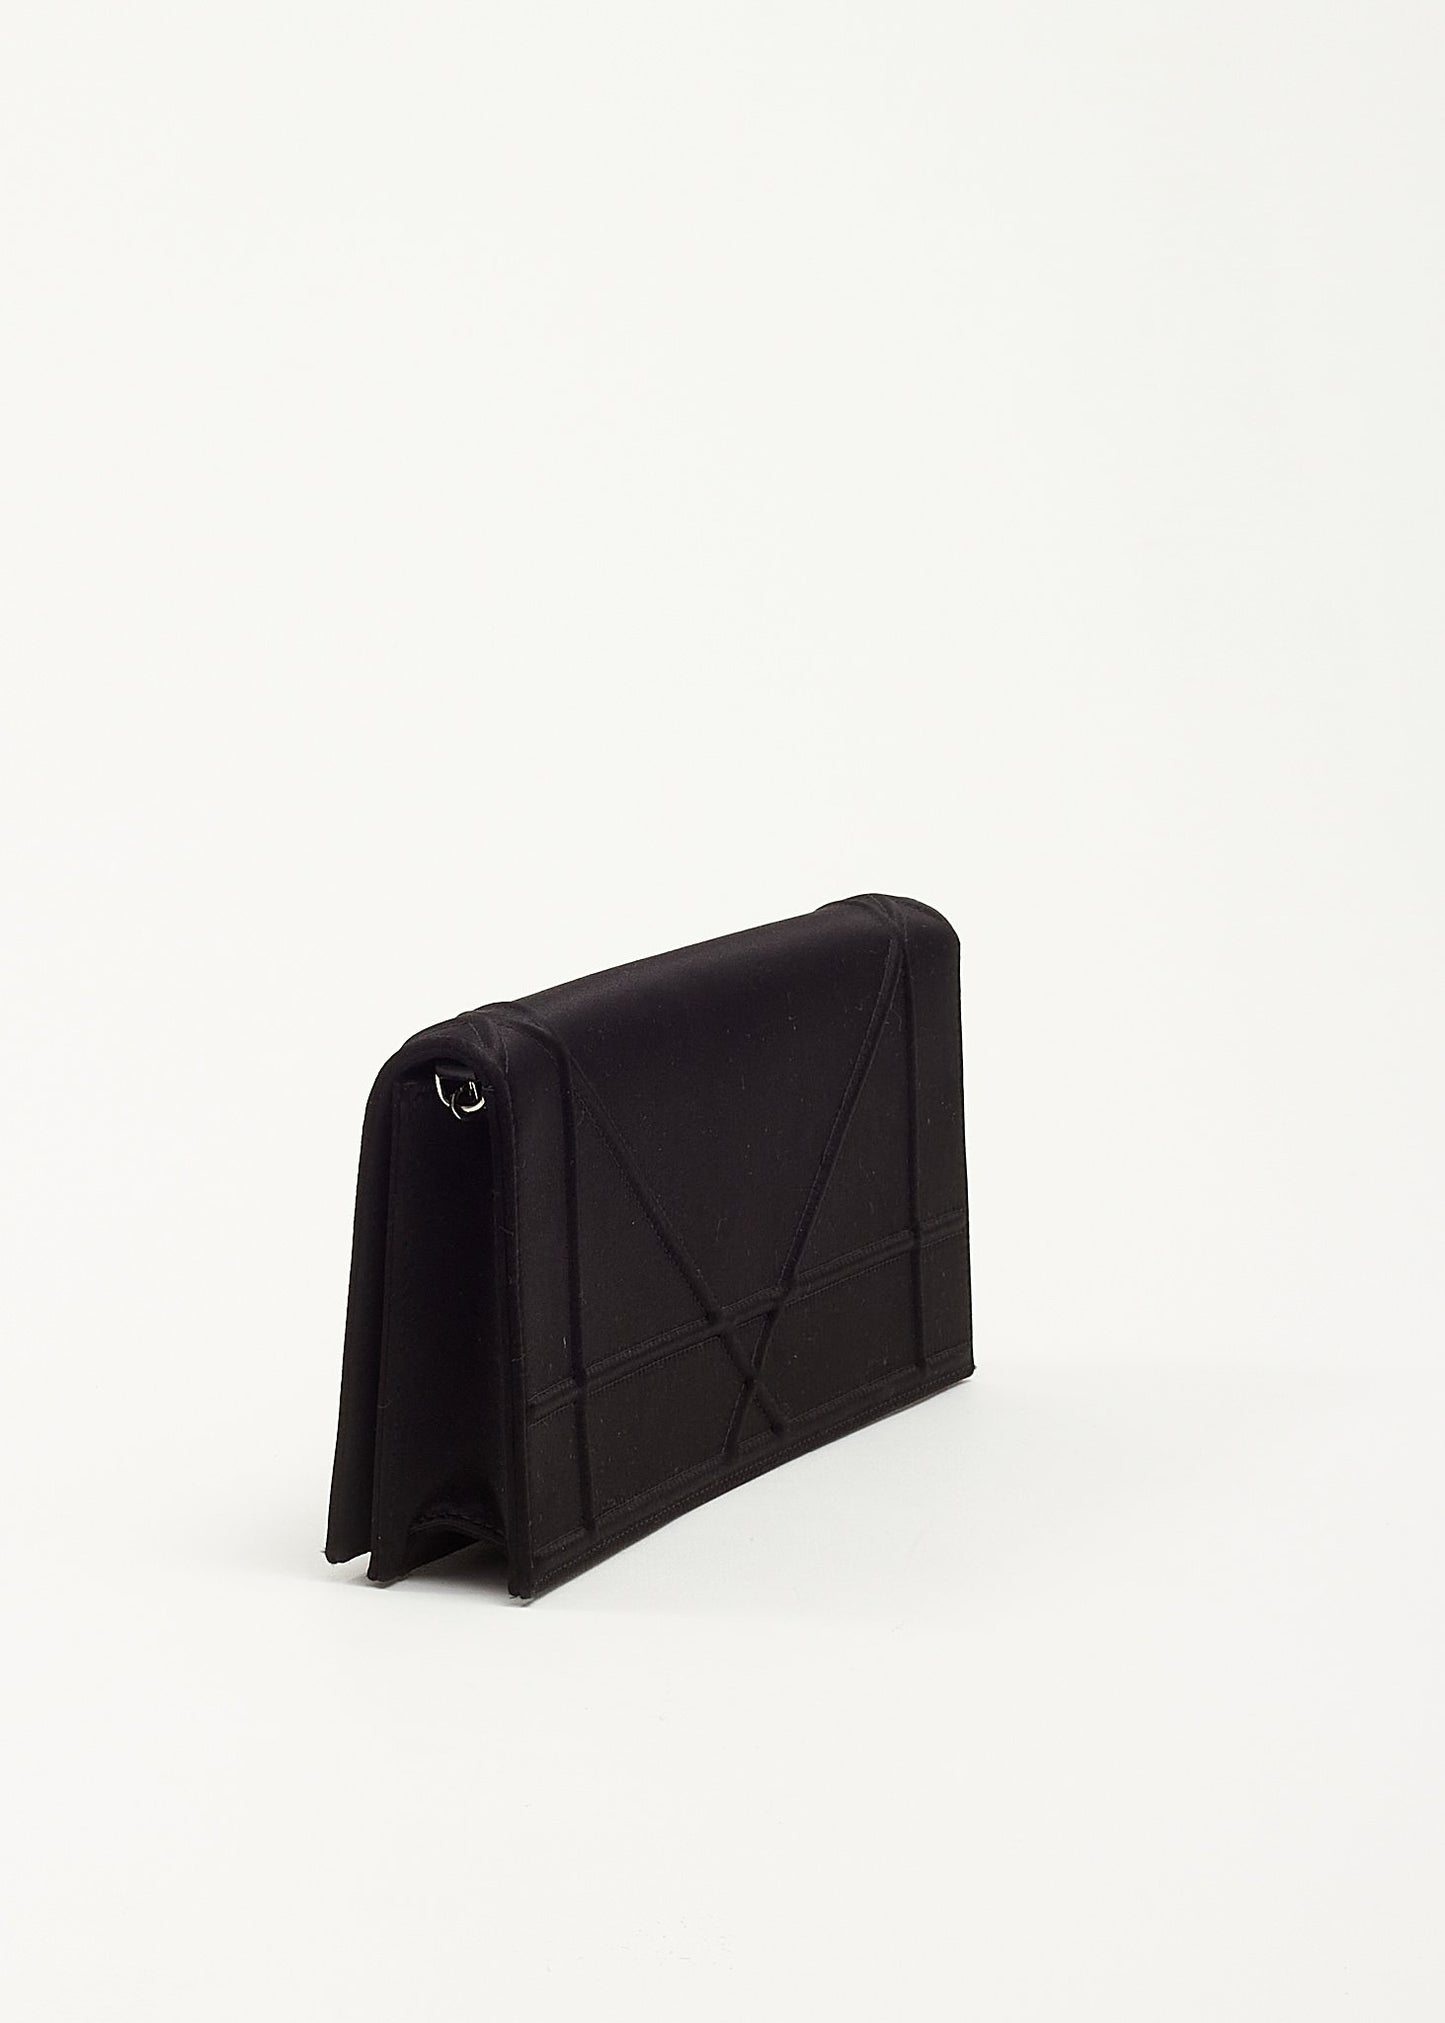 Pochette à chaîne convertible Diorama en satin noir Dior